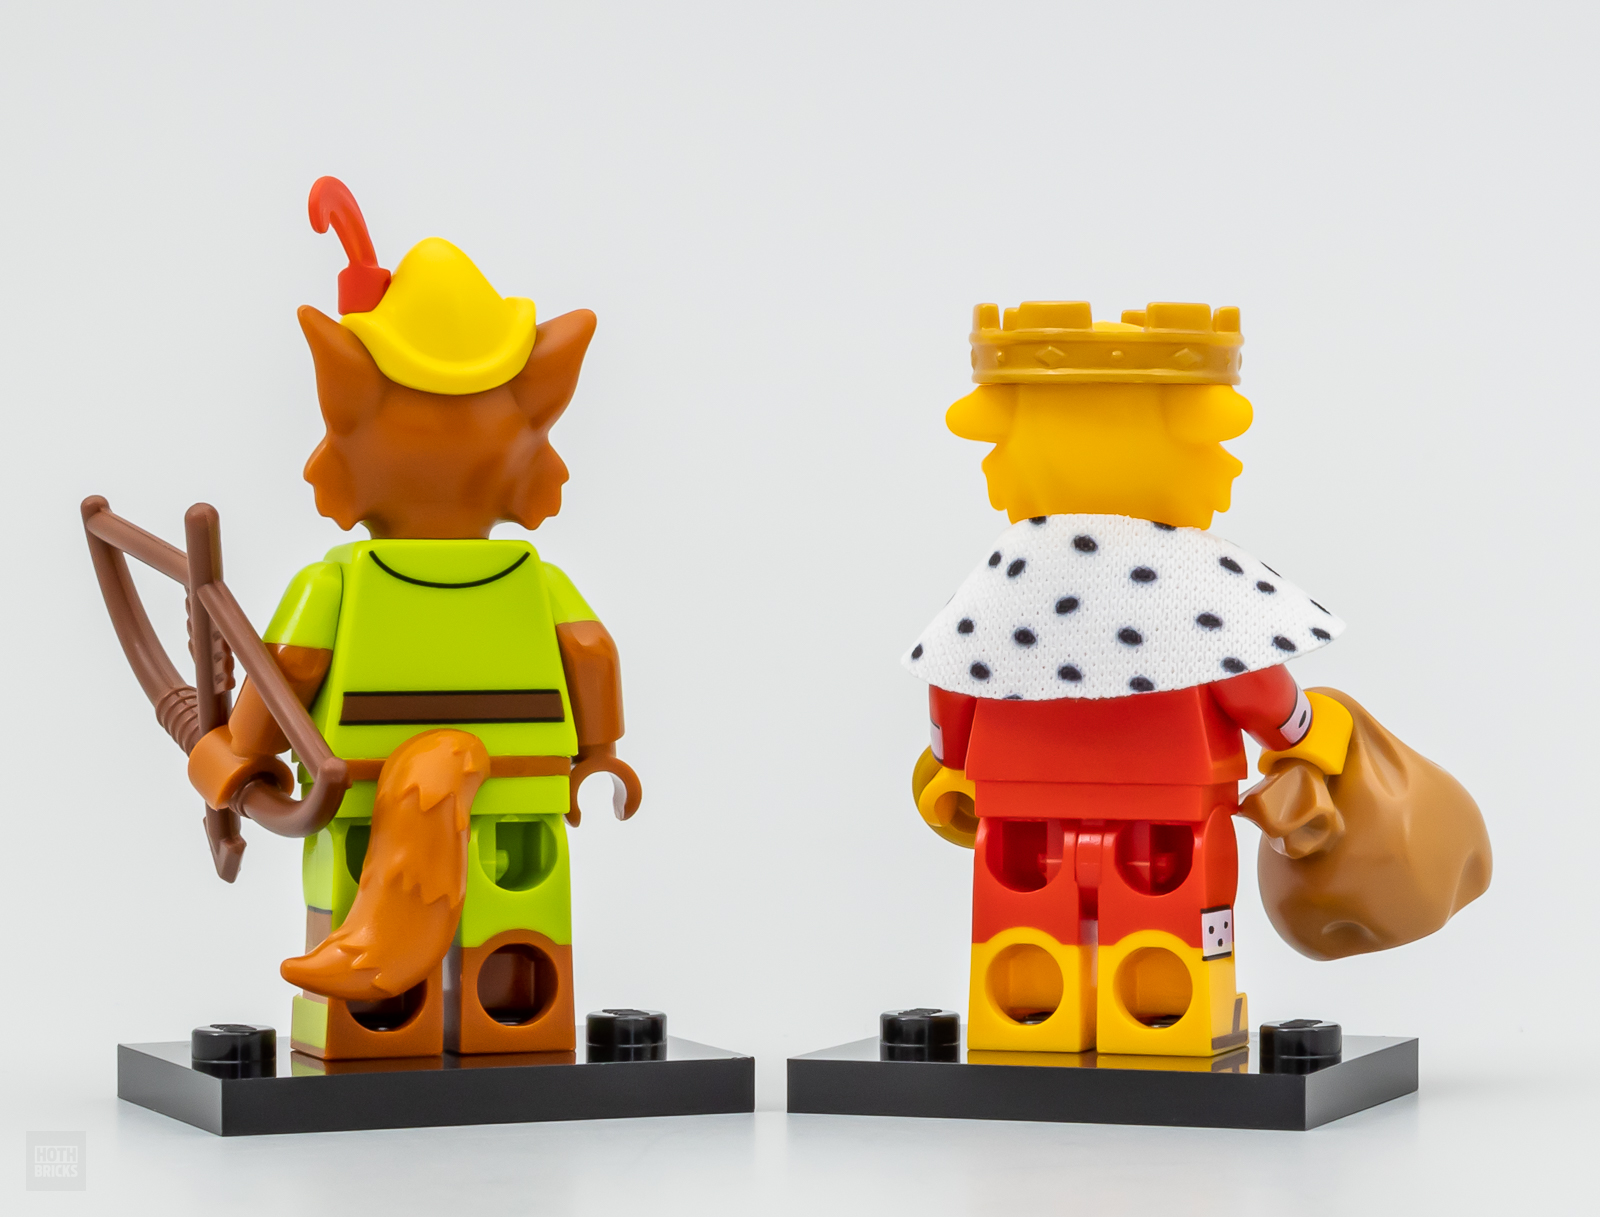 Minifigure LEGO® Disney 100 ans - Mickey apprenti sorcier - Super Briques